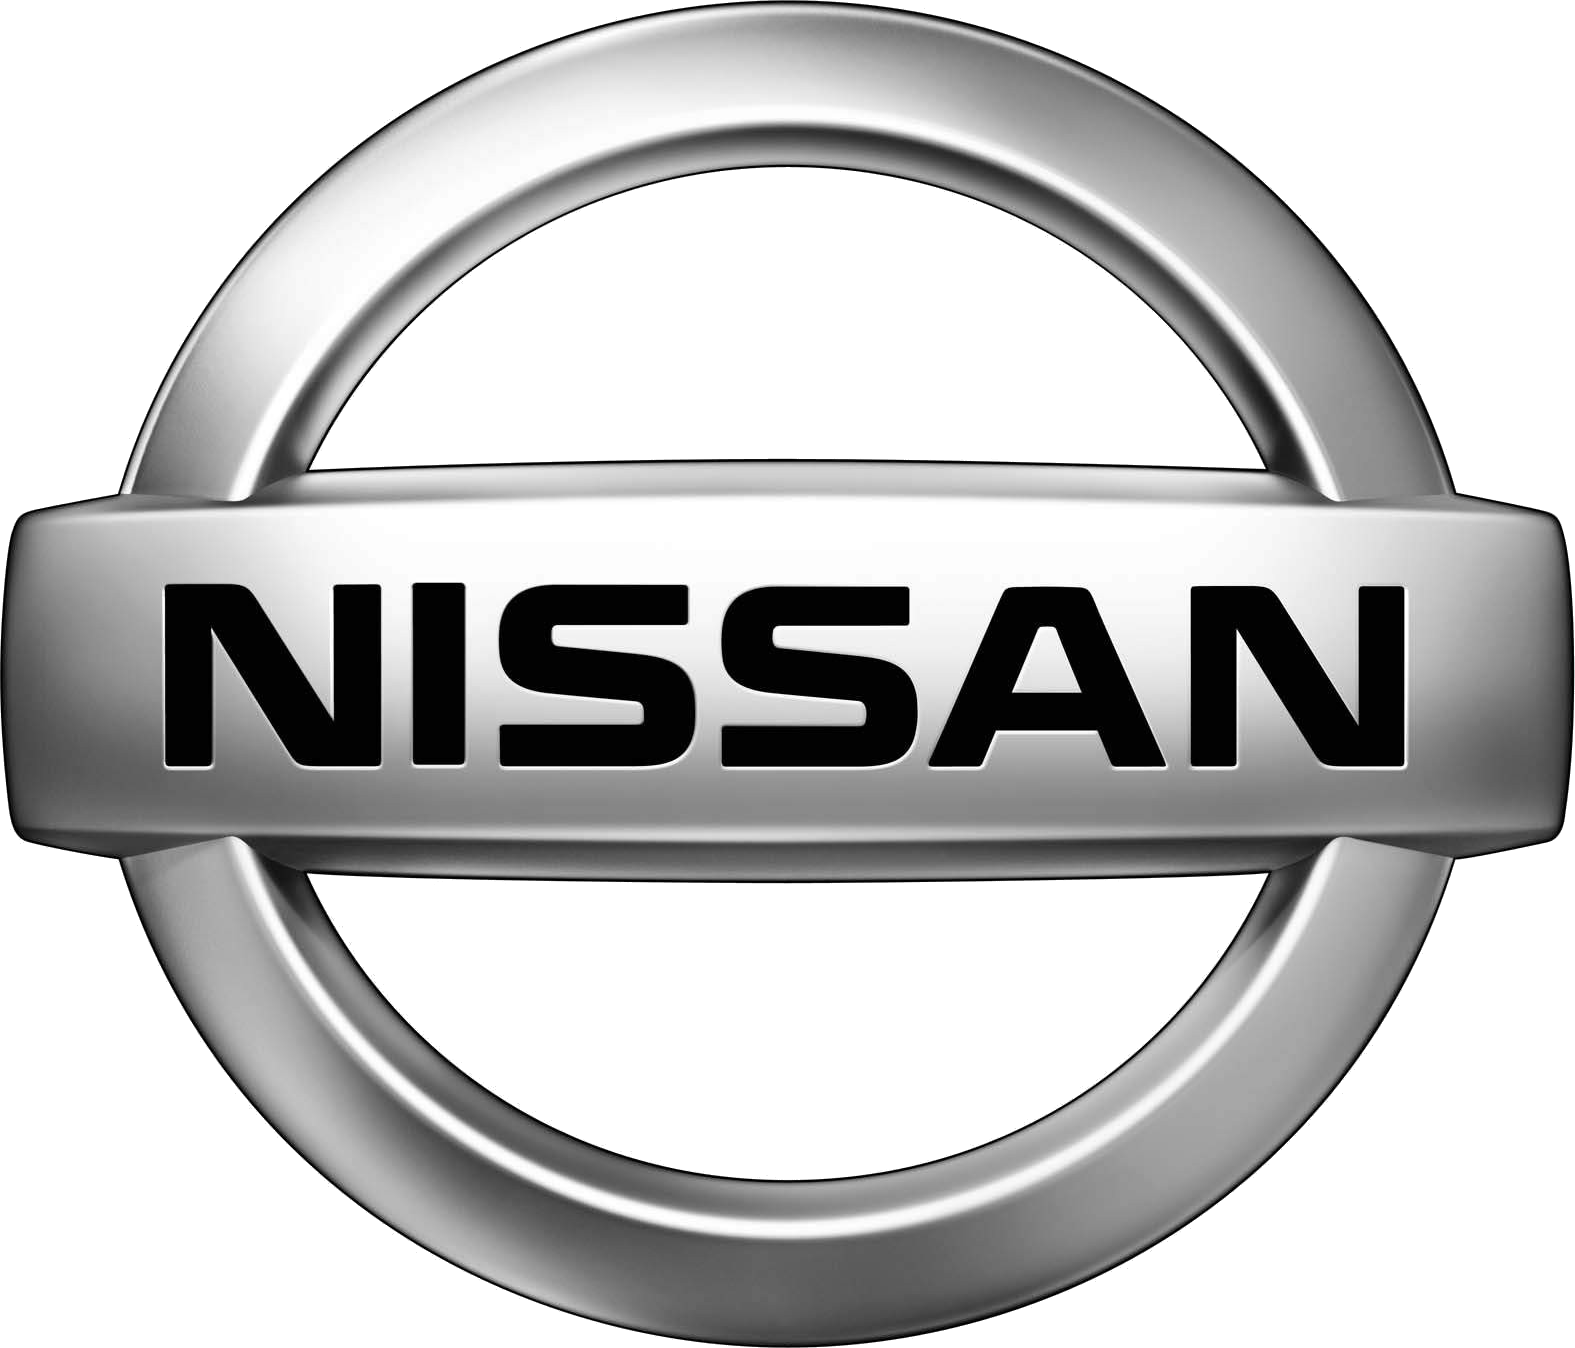 Nissan Logo - Image - Nissan logo.png | Logopedia | FANDOM powered by Wikia